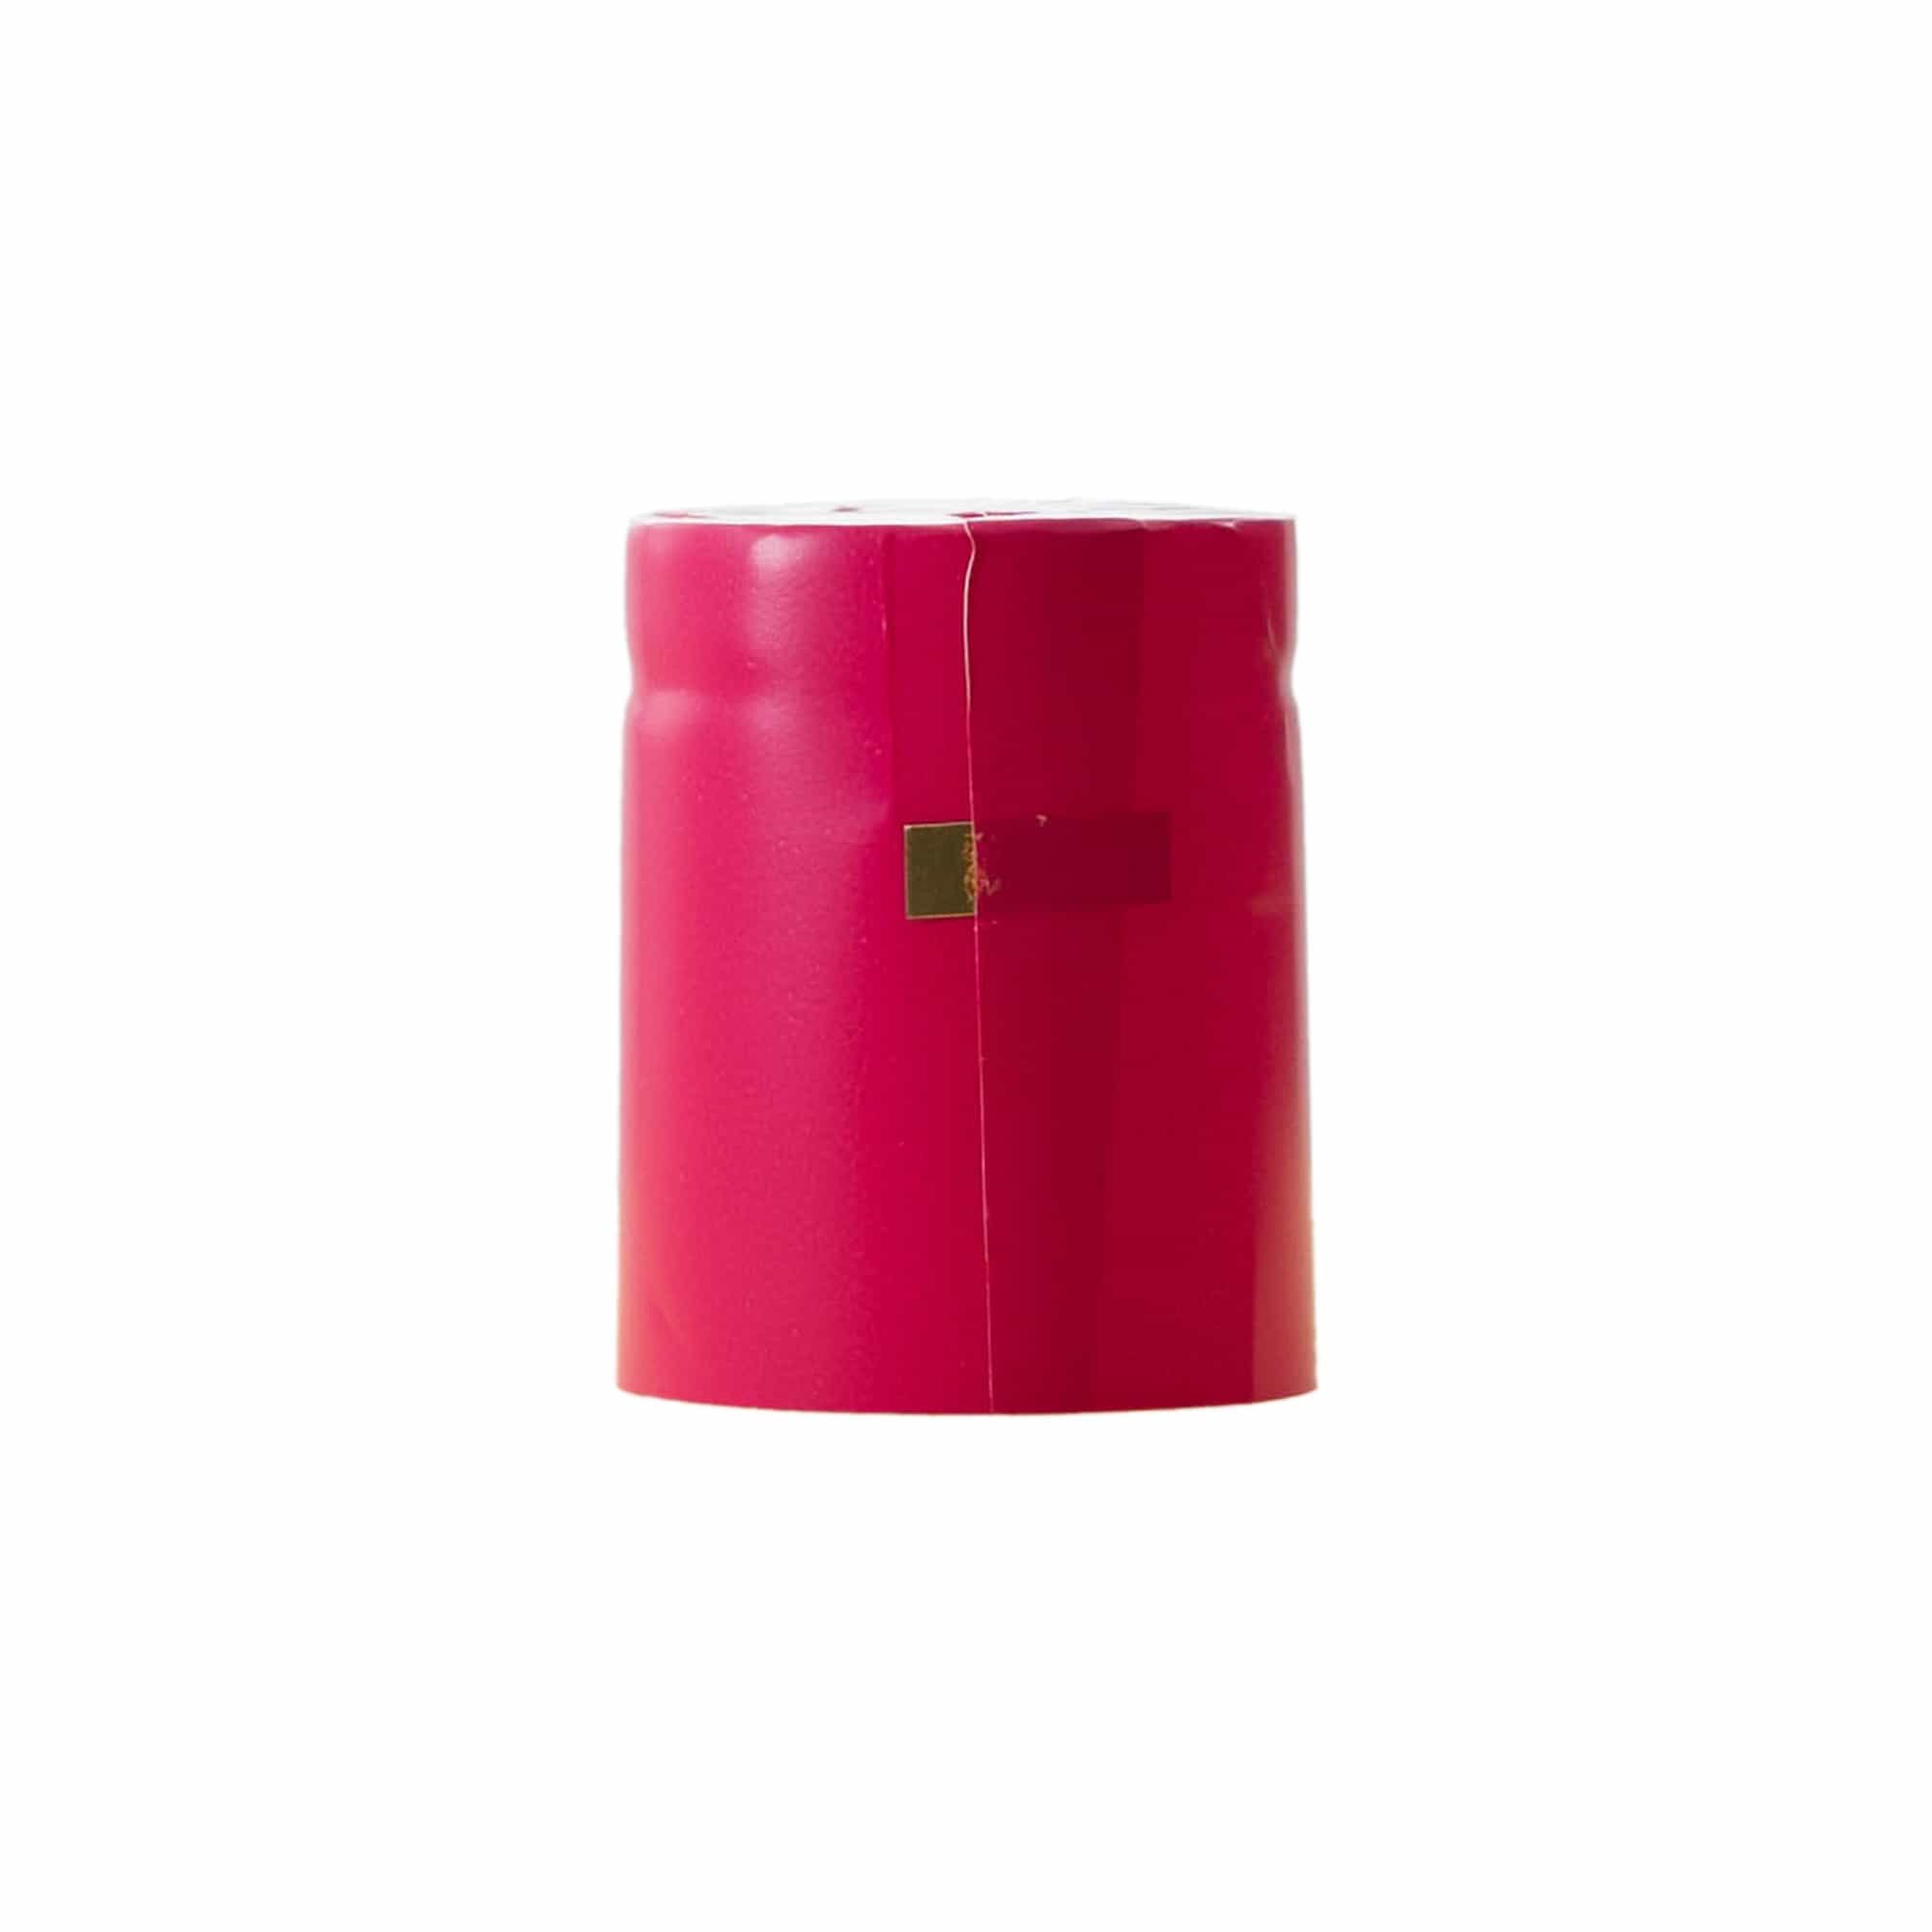 Heat shrink capsule 32x41, PVC plastic, pink